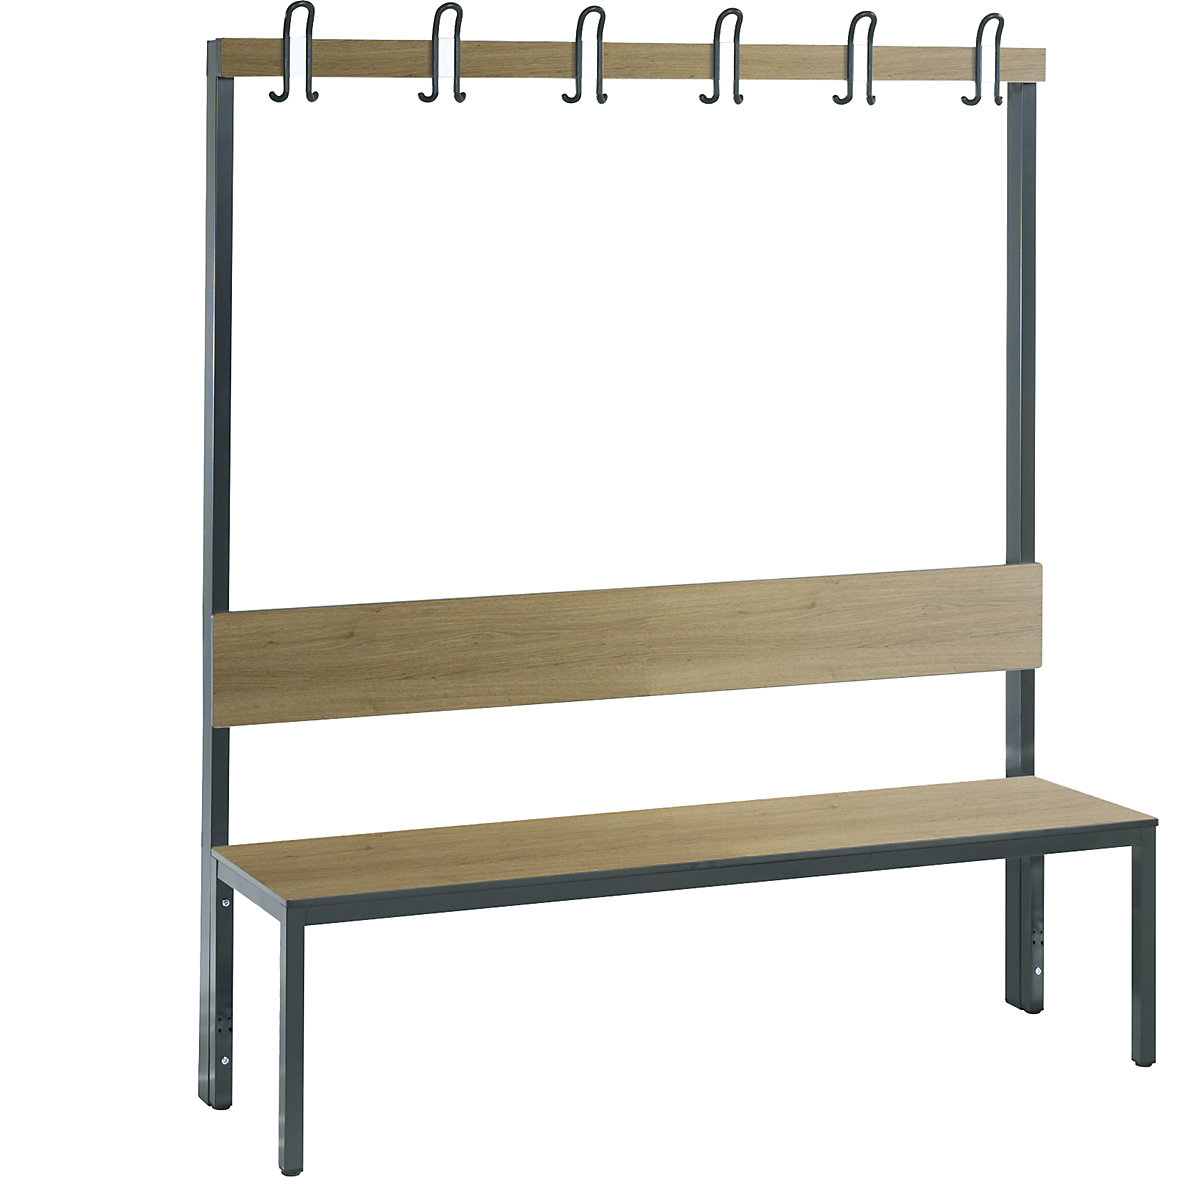 BASIC PLUS cloakroom bench, single sided – C+P, seat HPL, hook rail, length 1500 mm, oak finish-5